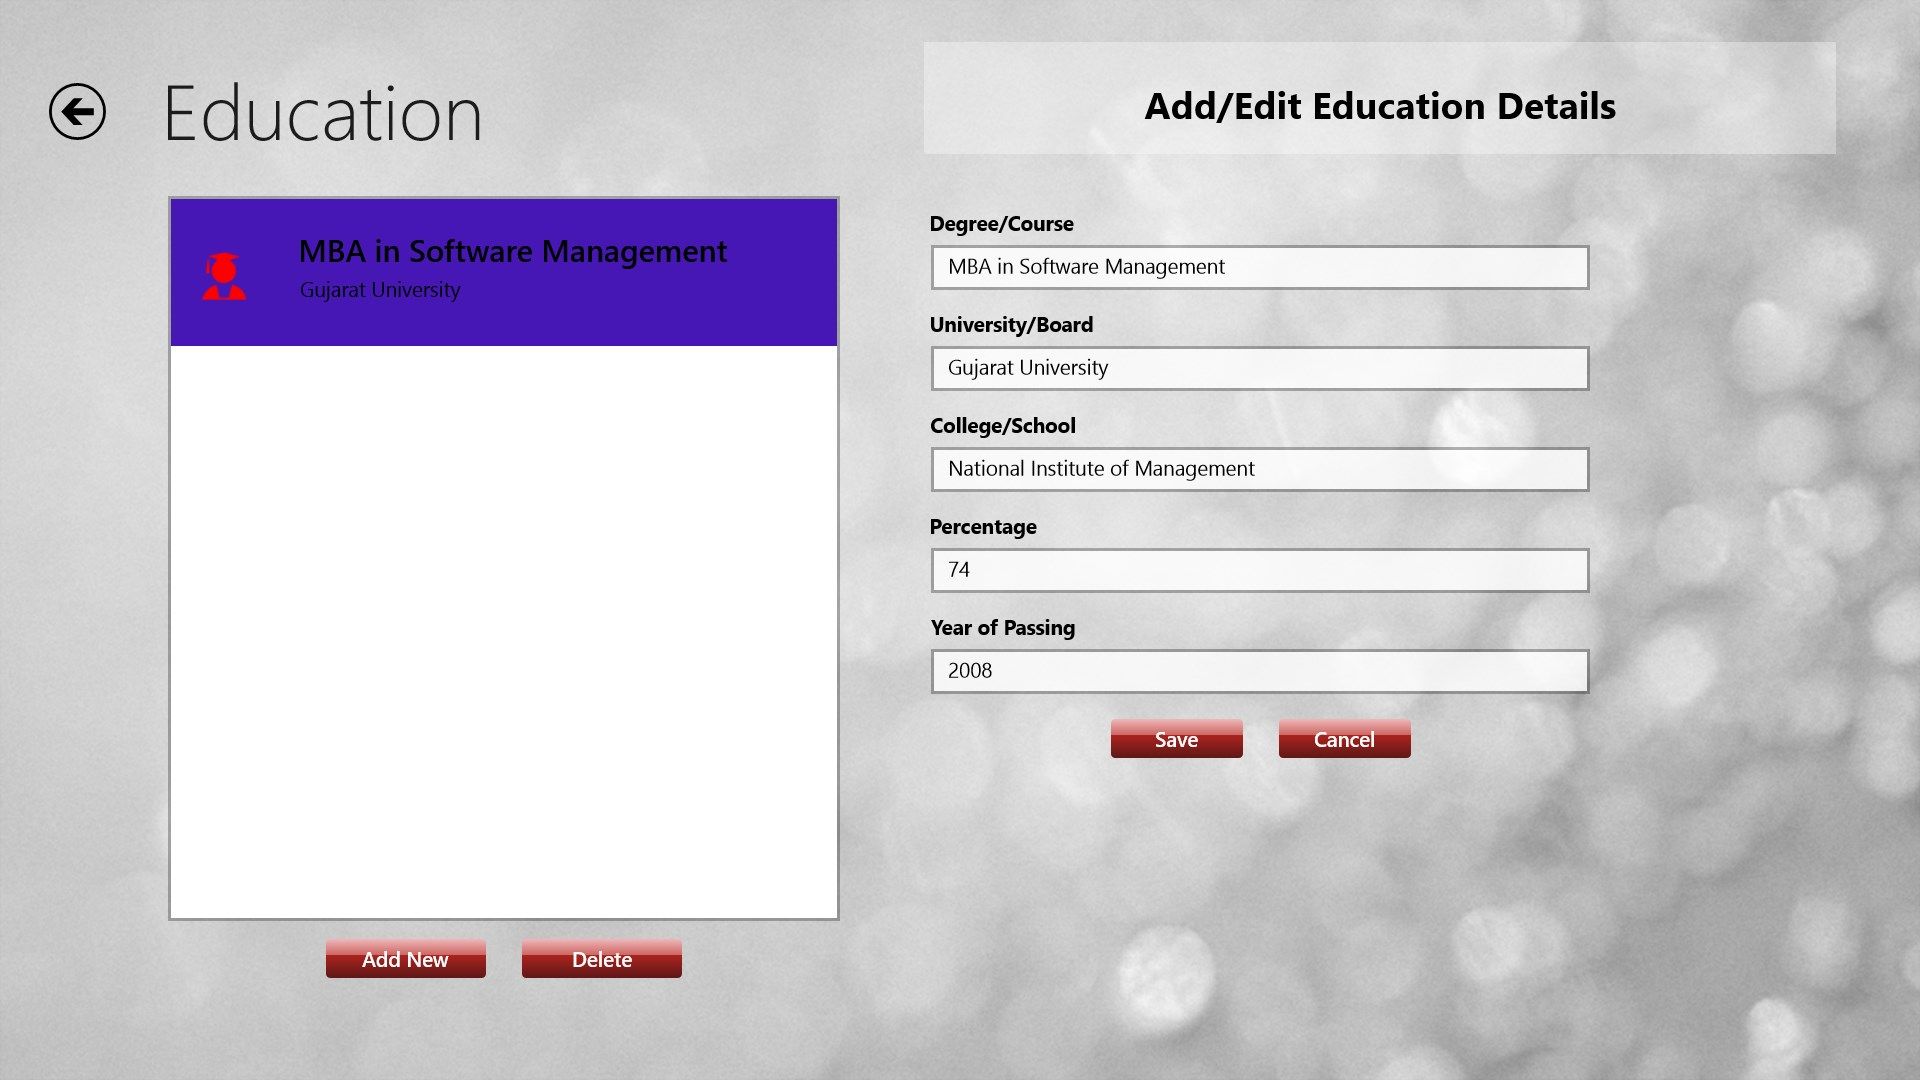 Manage Education details for resume